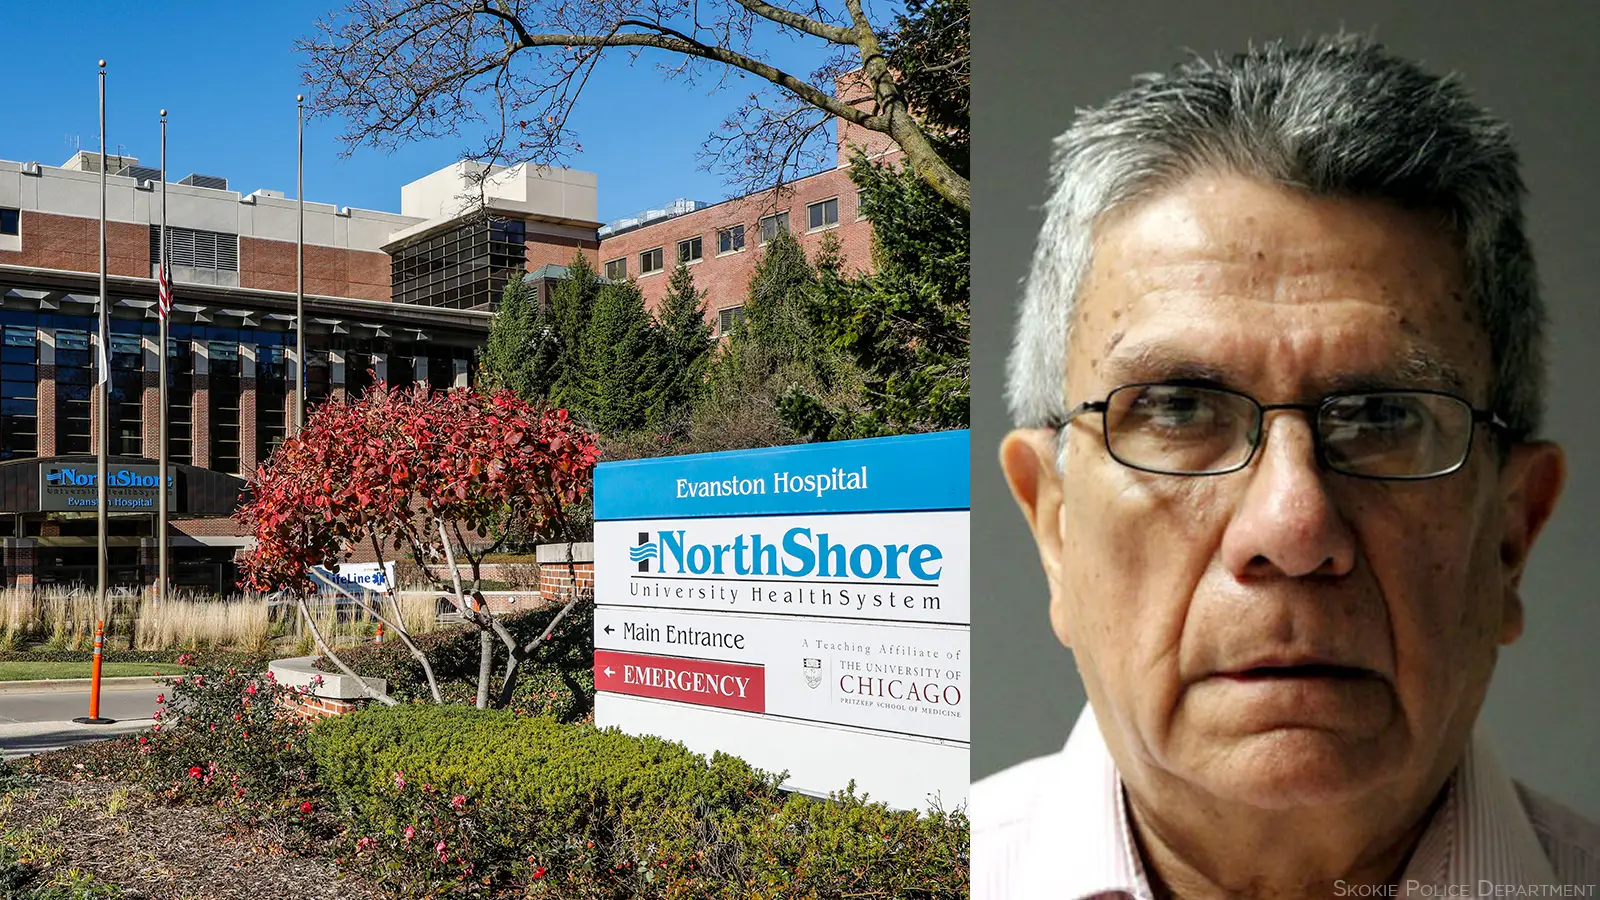 Jane Doe 43 alleges sexual assault by Gynecologist Fabio Ortega, NorthShore University HealthSystem